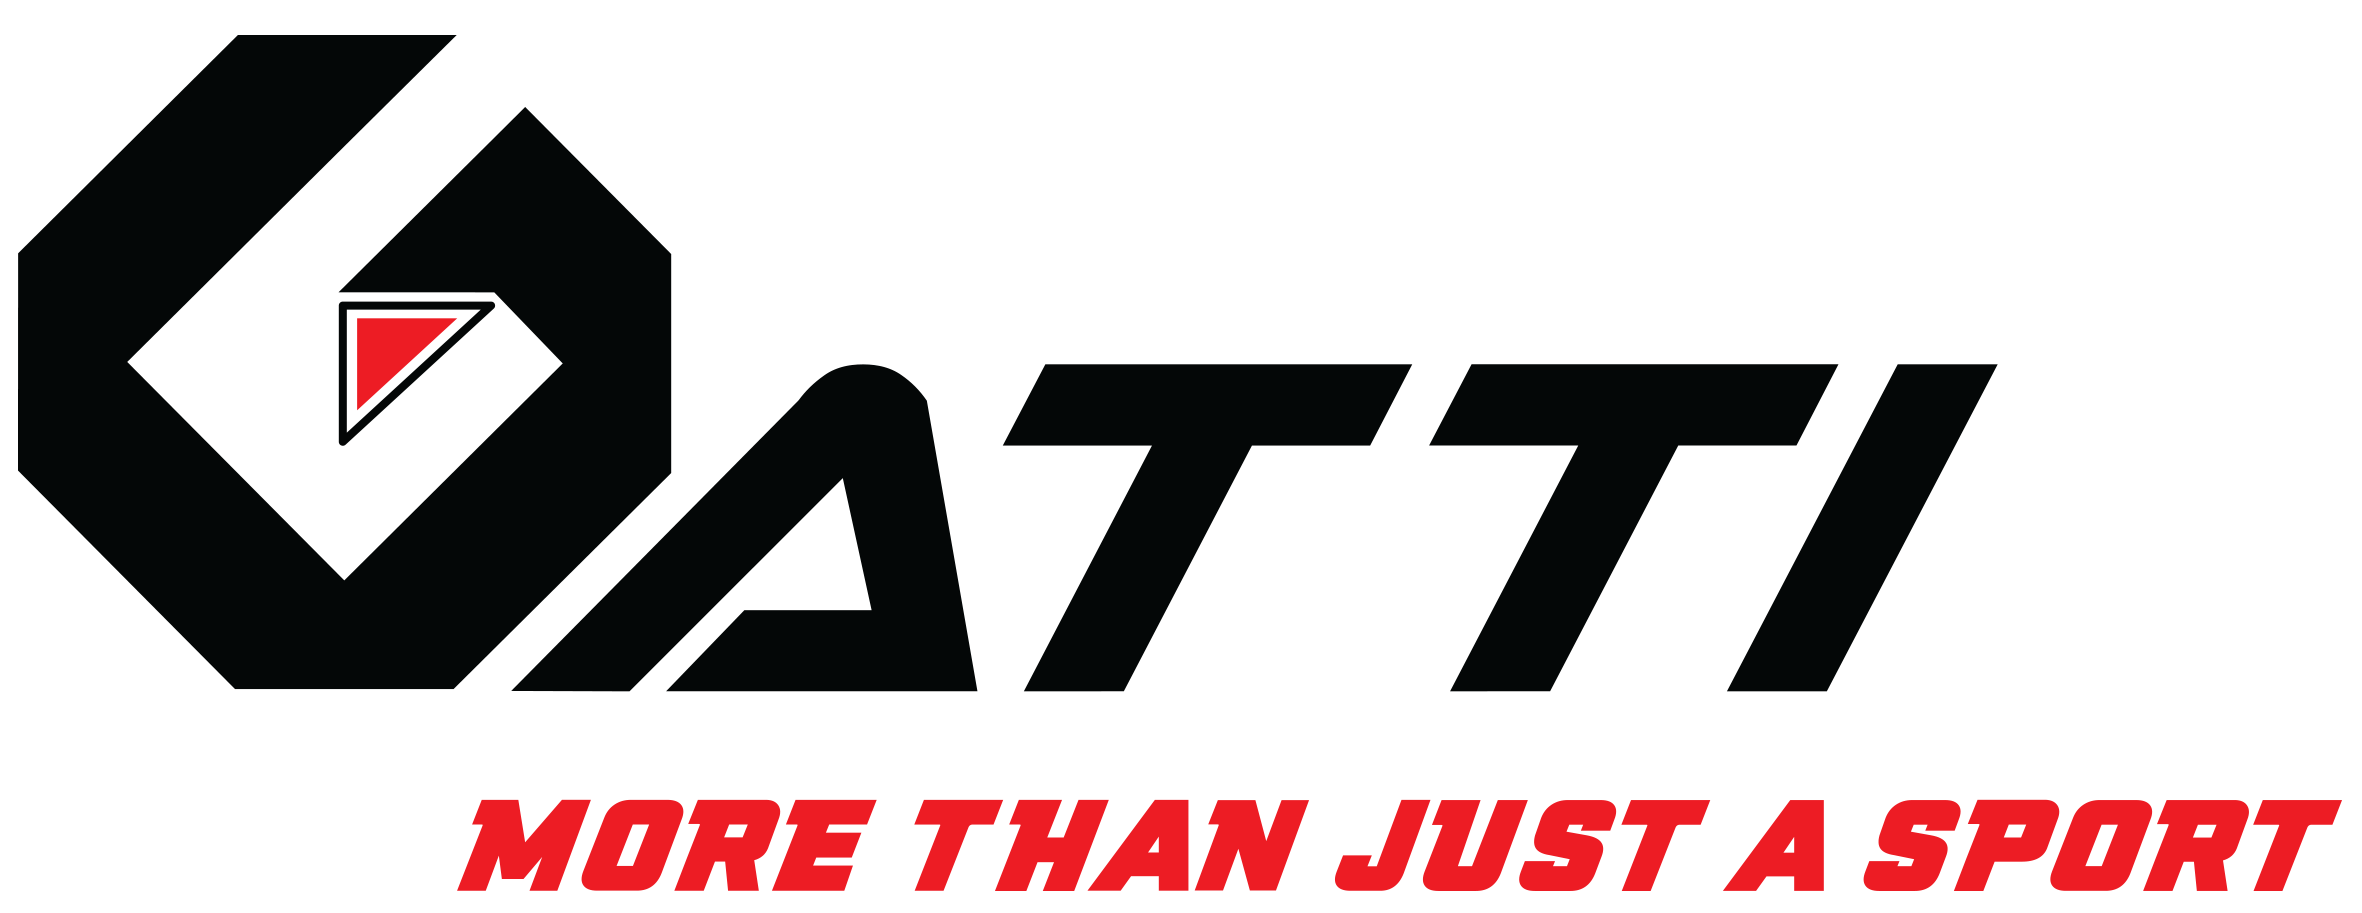 Gatti Logo clean